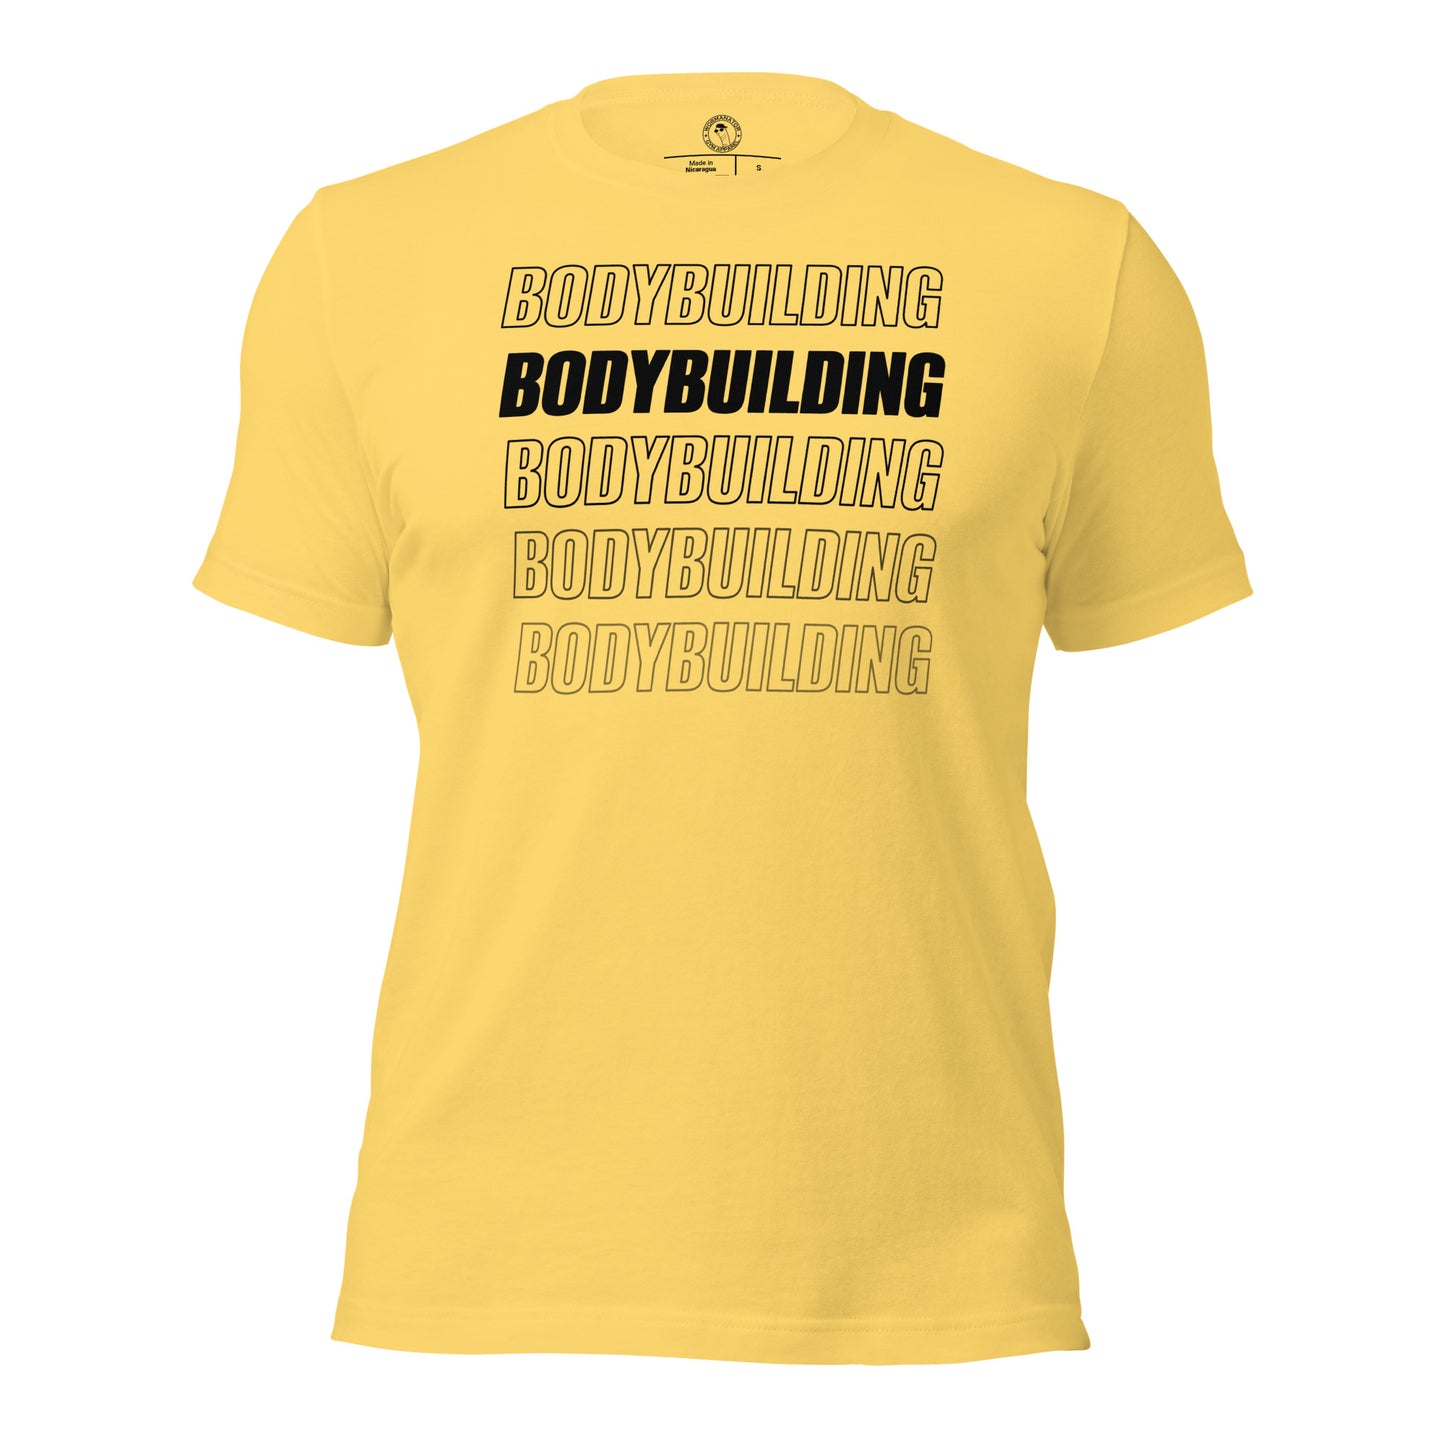 Bodybuilding Shirt in Yellow